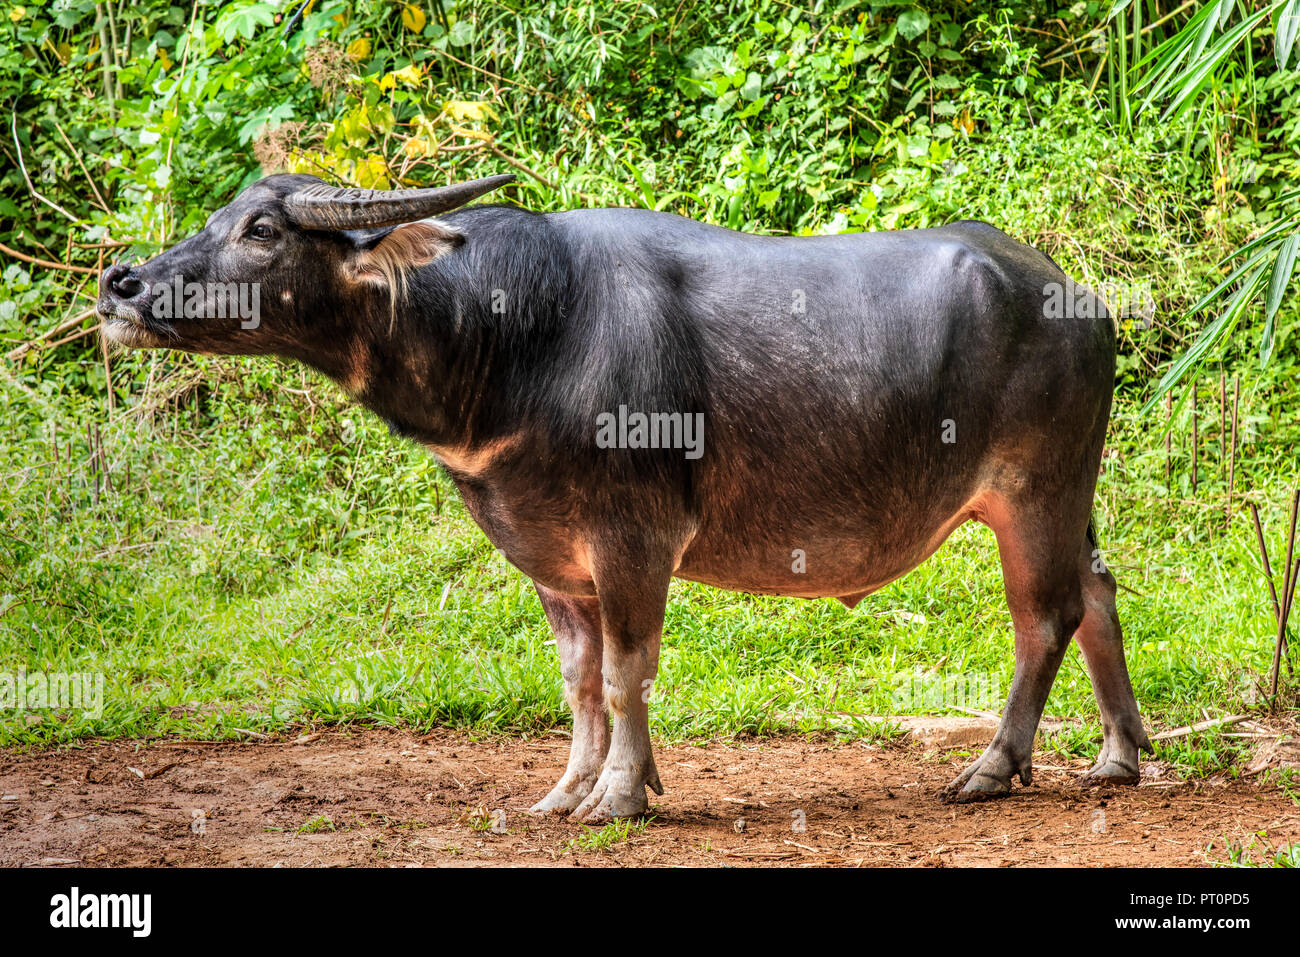 Water buffalo or Bubalus bubalis, Rantepao, Tana Toraja, Sulawesi, Indonesia Stock Photo